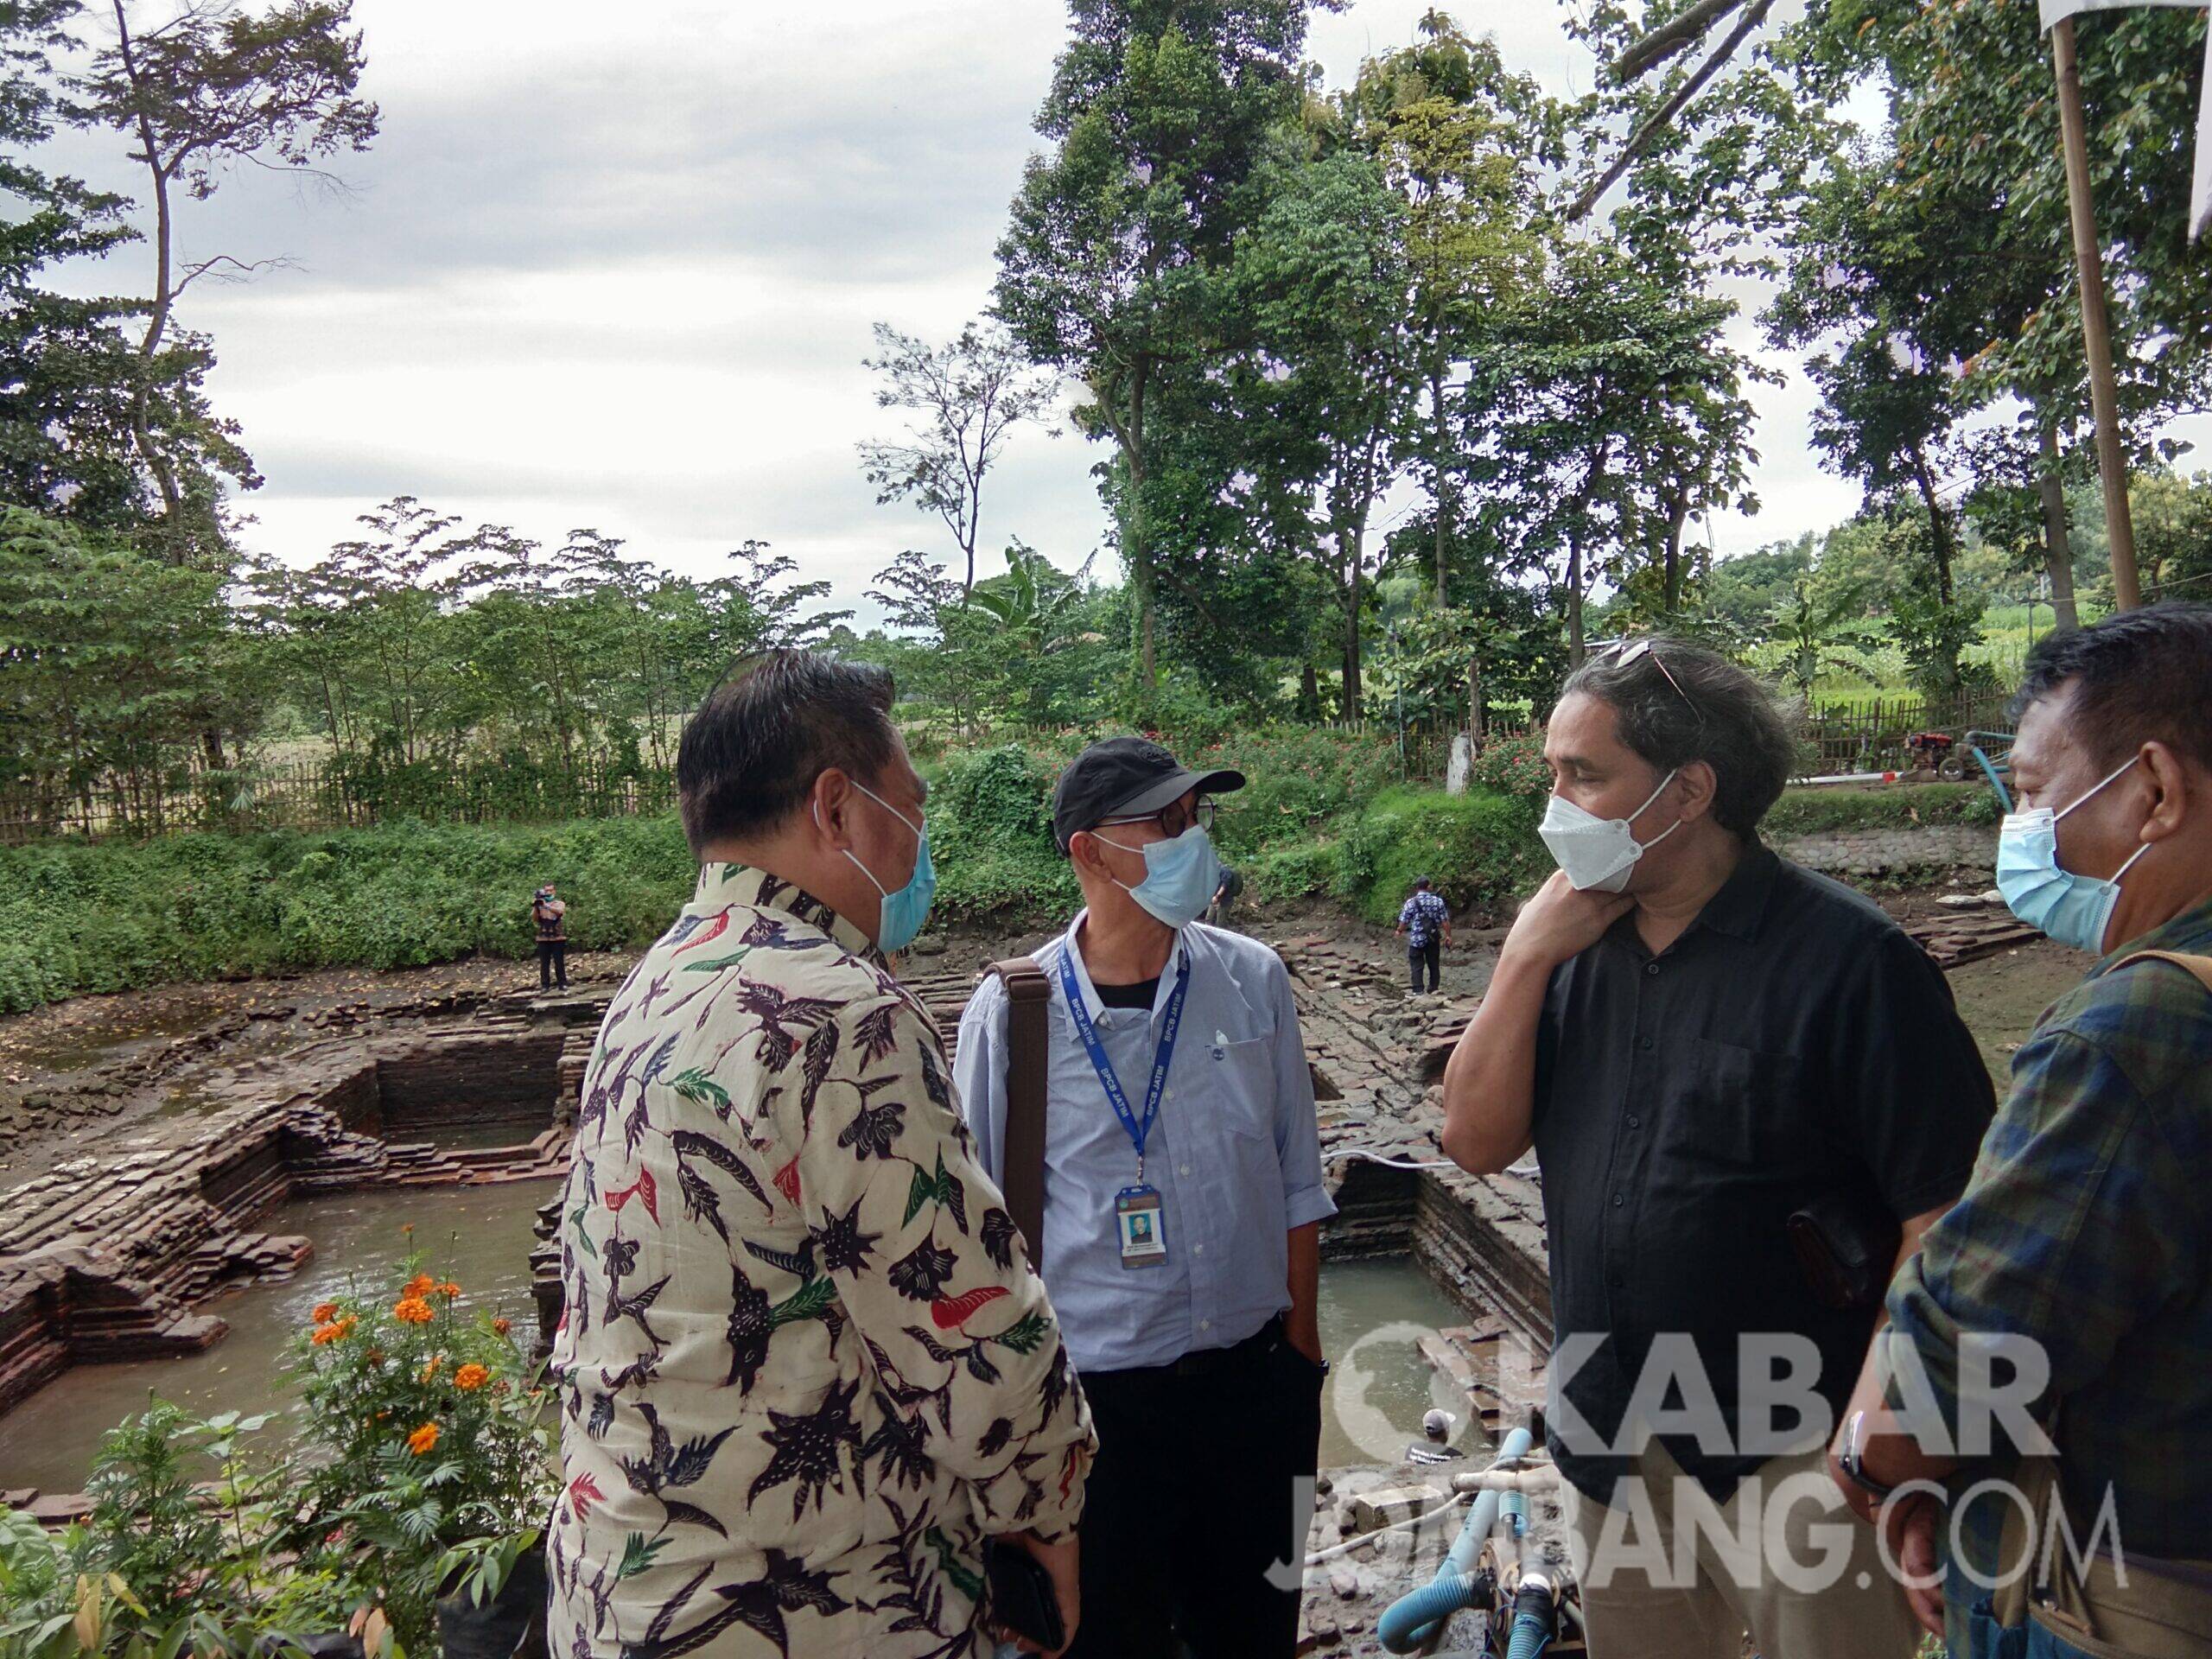 Direktur Jenderal Kebudayaan Kemdikbud, Hilmar Farid (kedua kanan) saat mengunjungi situs Sumberbeji di Dusun Sumberbeji, Desa Kesamben, Kecamatan Ngoro, Jumat (15/1/2021). KabarJombang.com/Anggraini Dwi/